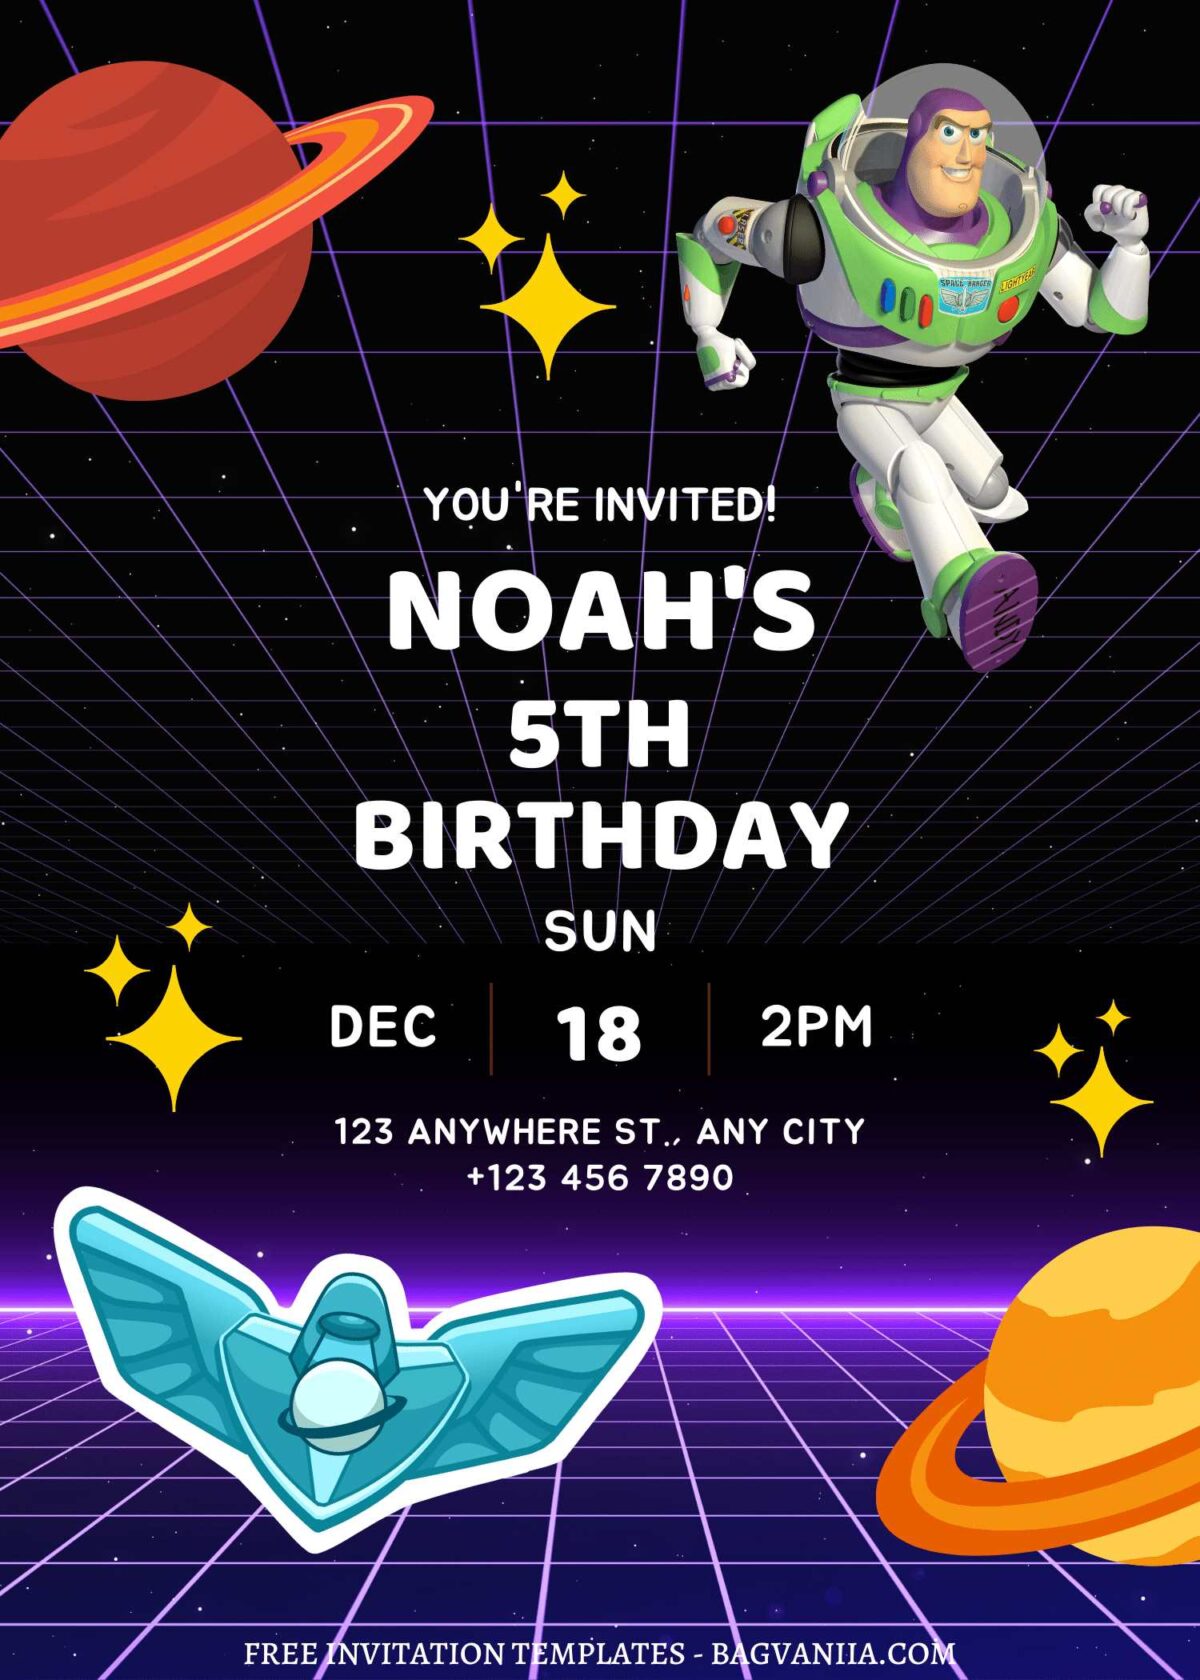 FREE EDITABLE - 8+ Space Ranger Buzz Canva Birthday Invitation Templates  with Buzz Lightyear's logo